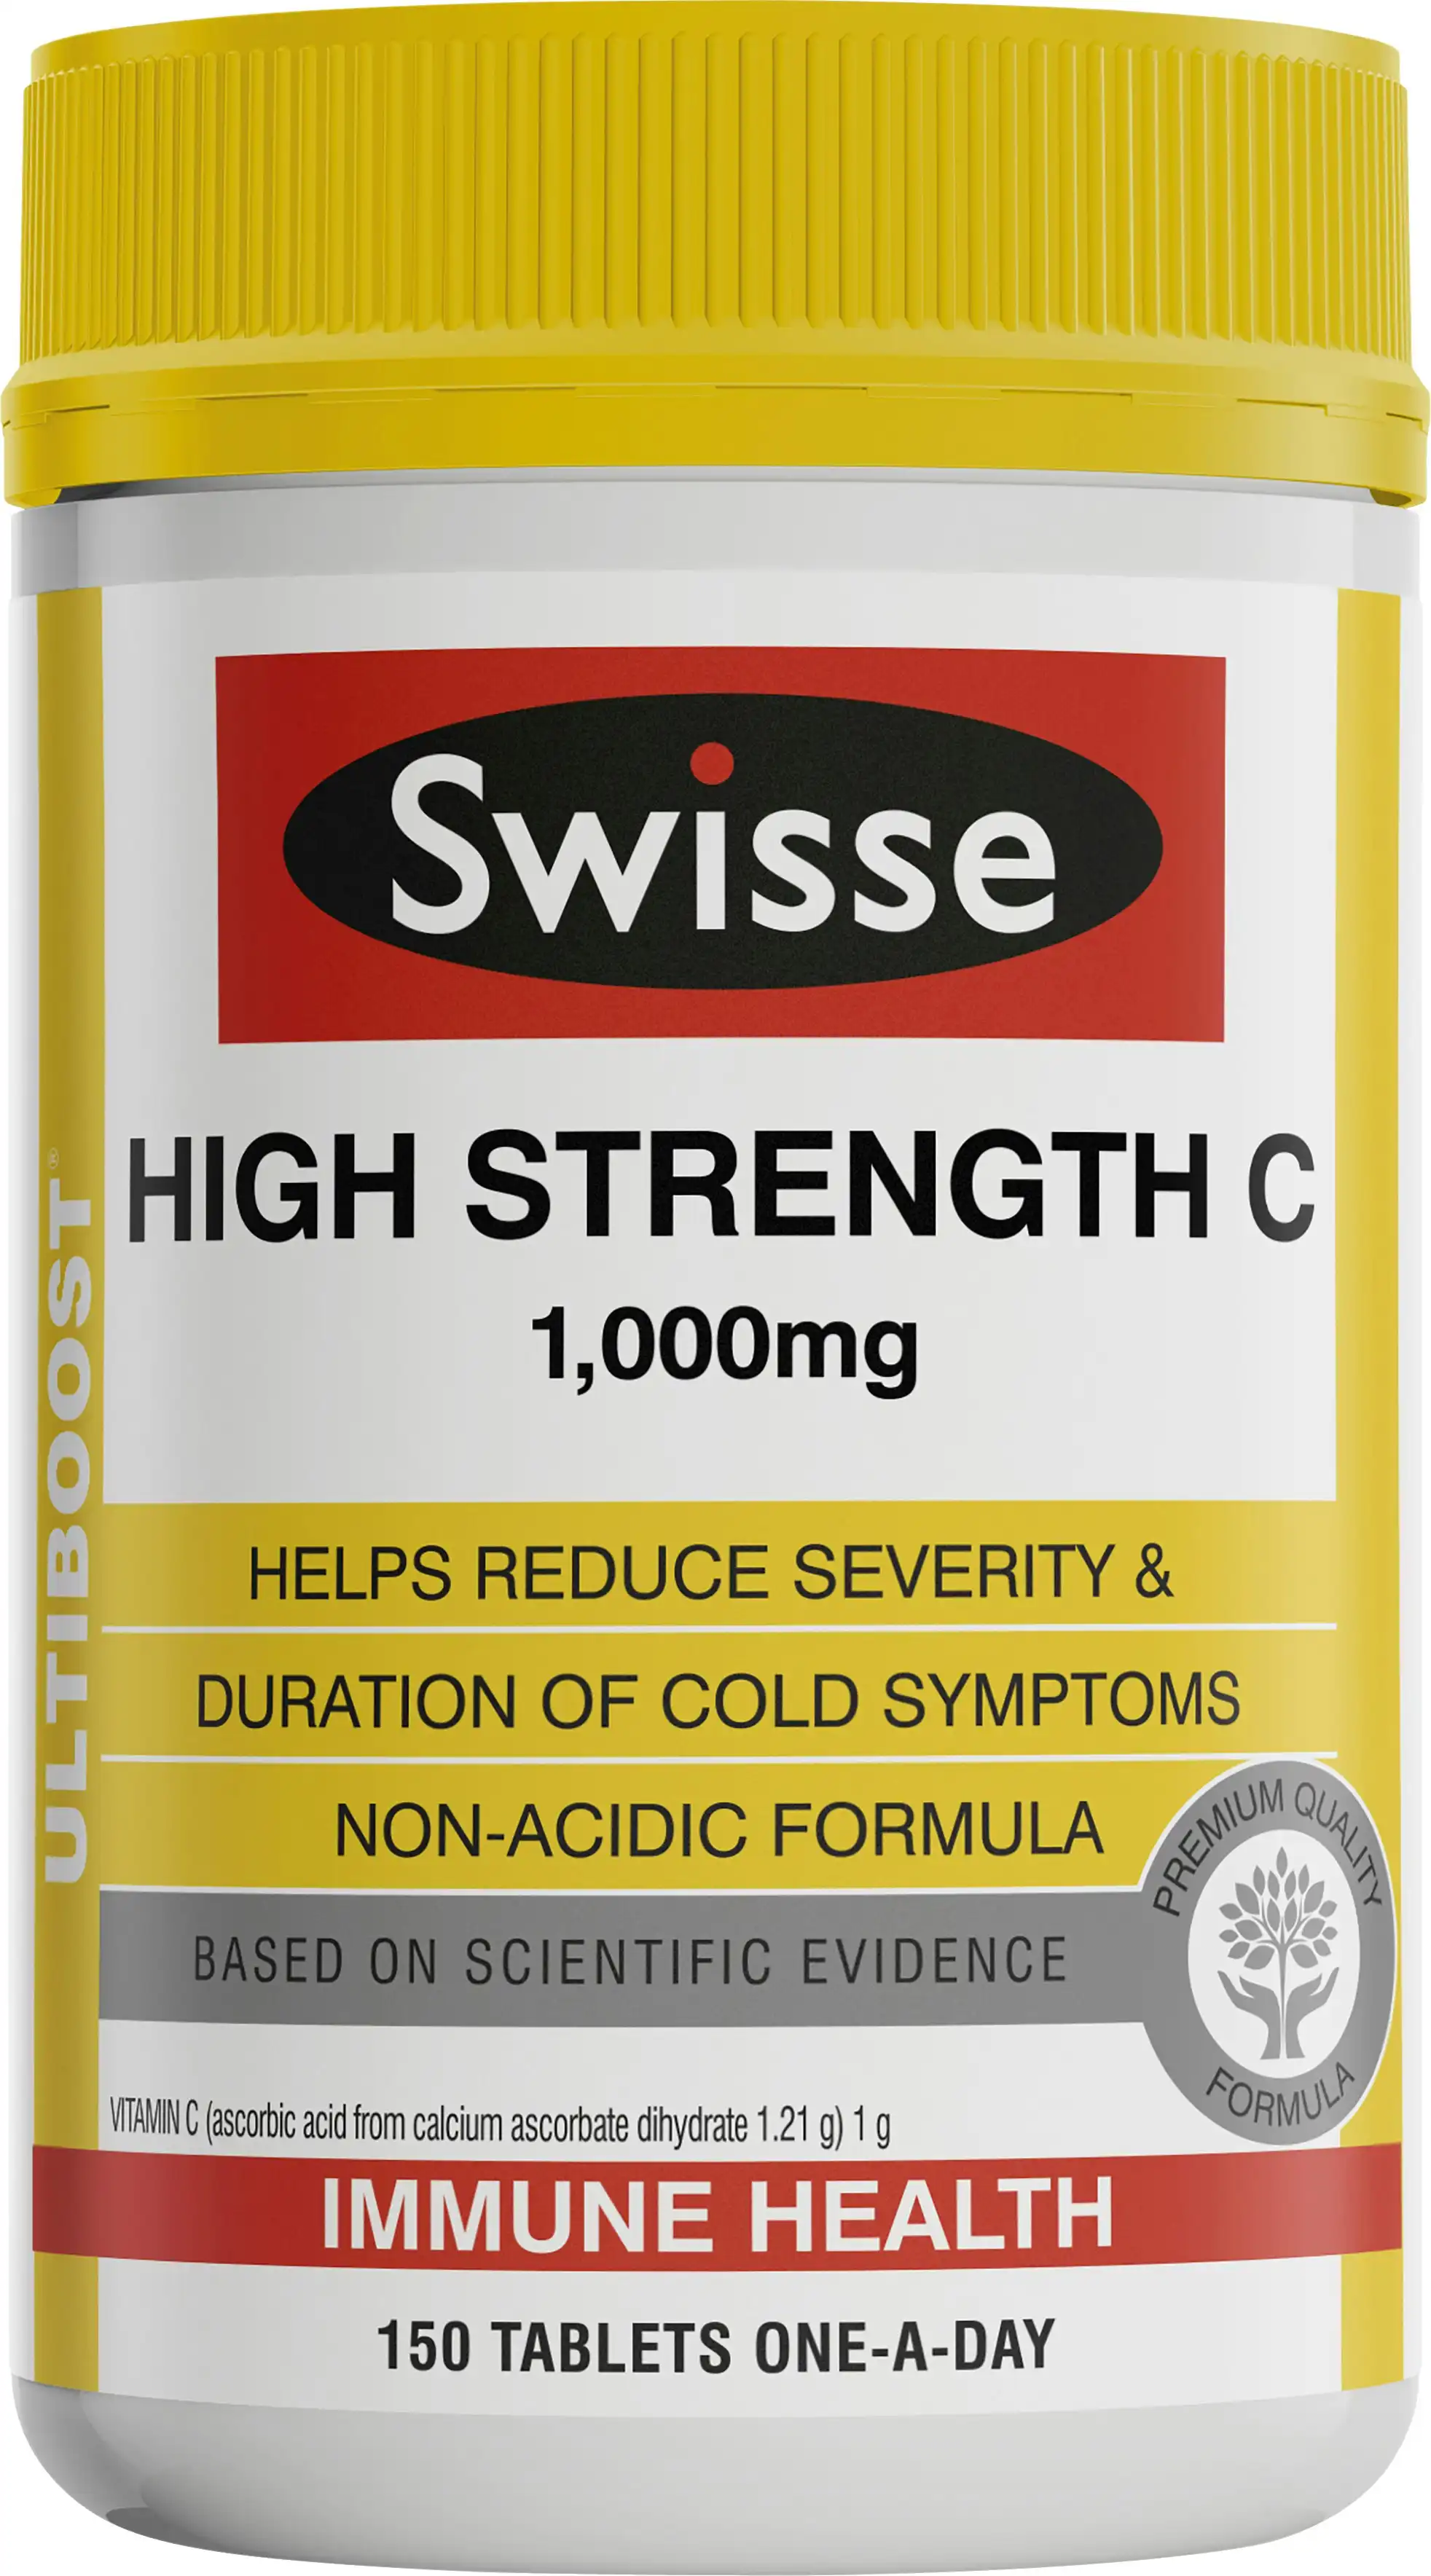 Swisse Ultiboost High Strength C 150 Tabs